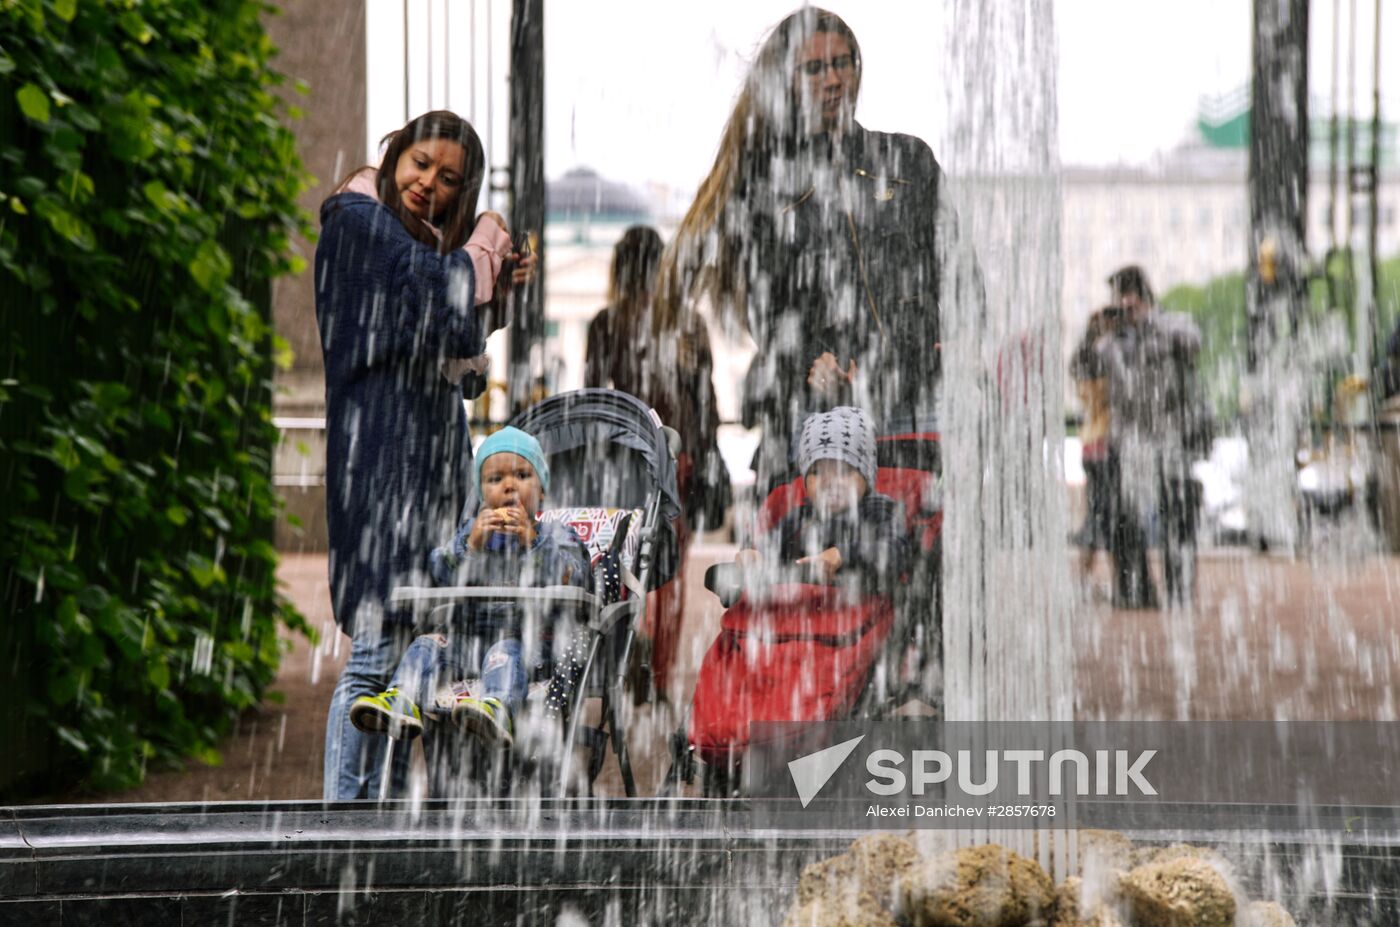 Fountain season launched in St. Petersburg's Summer Garden